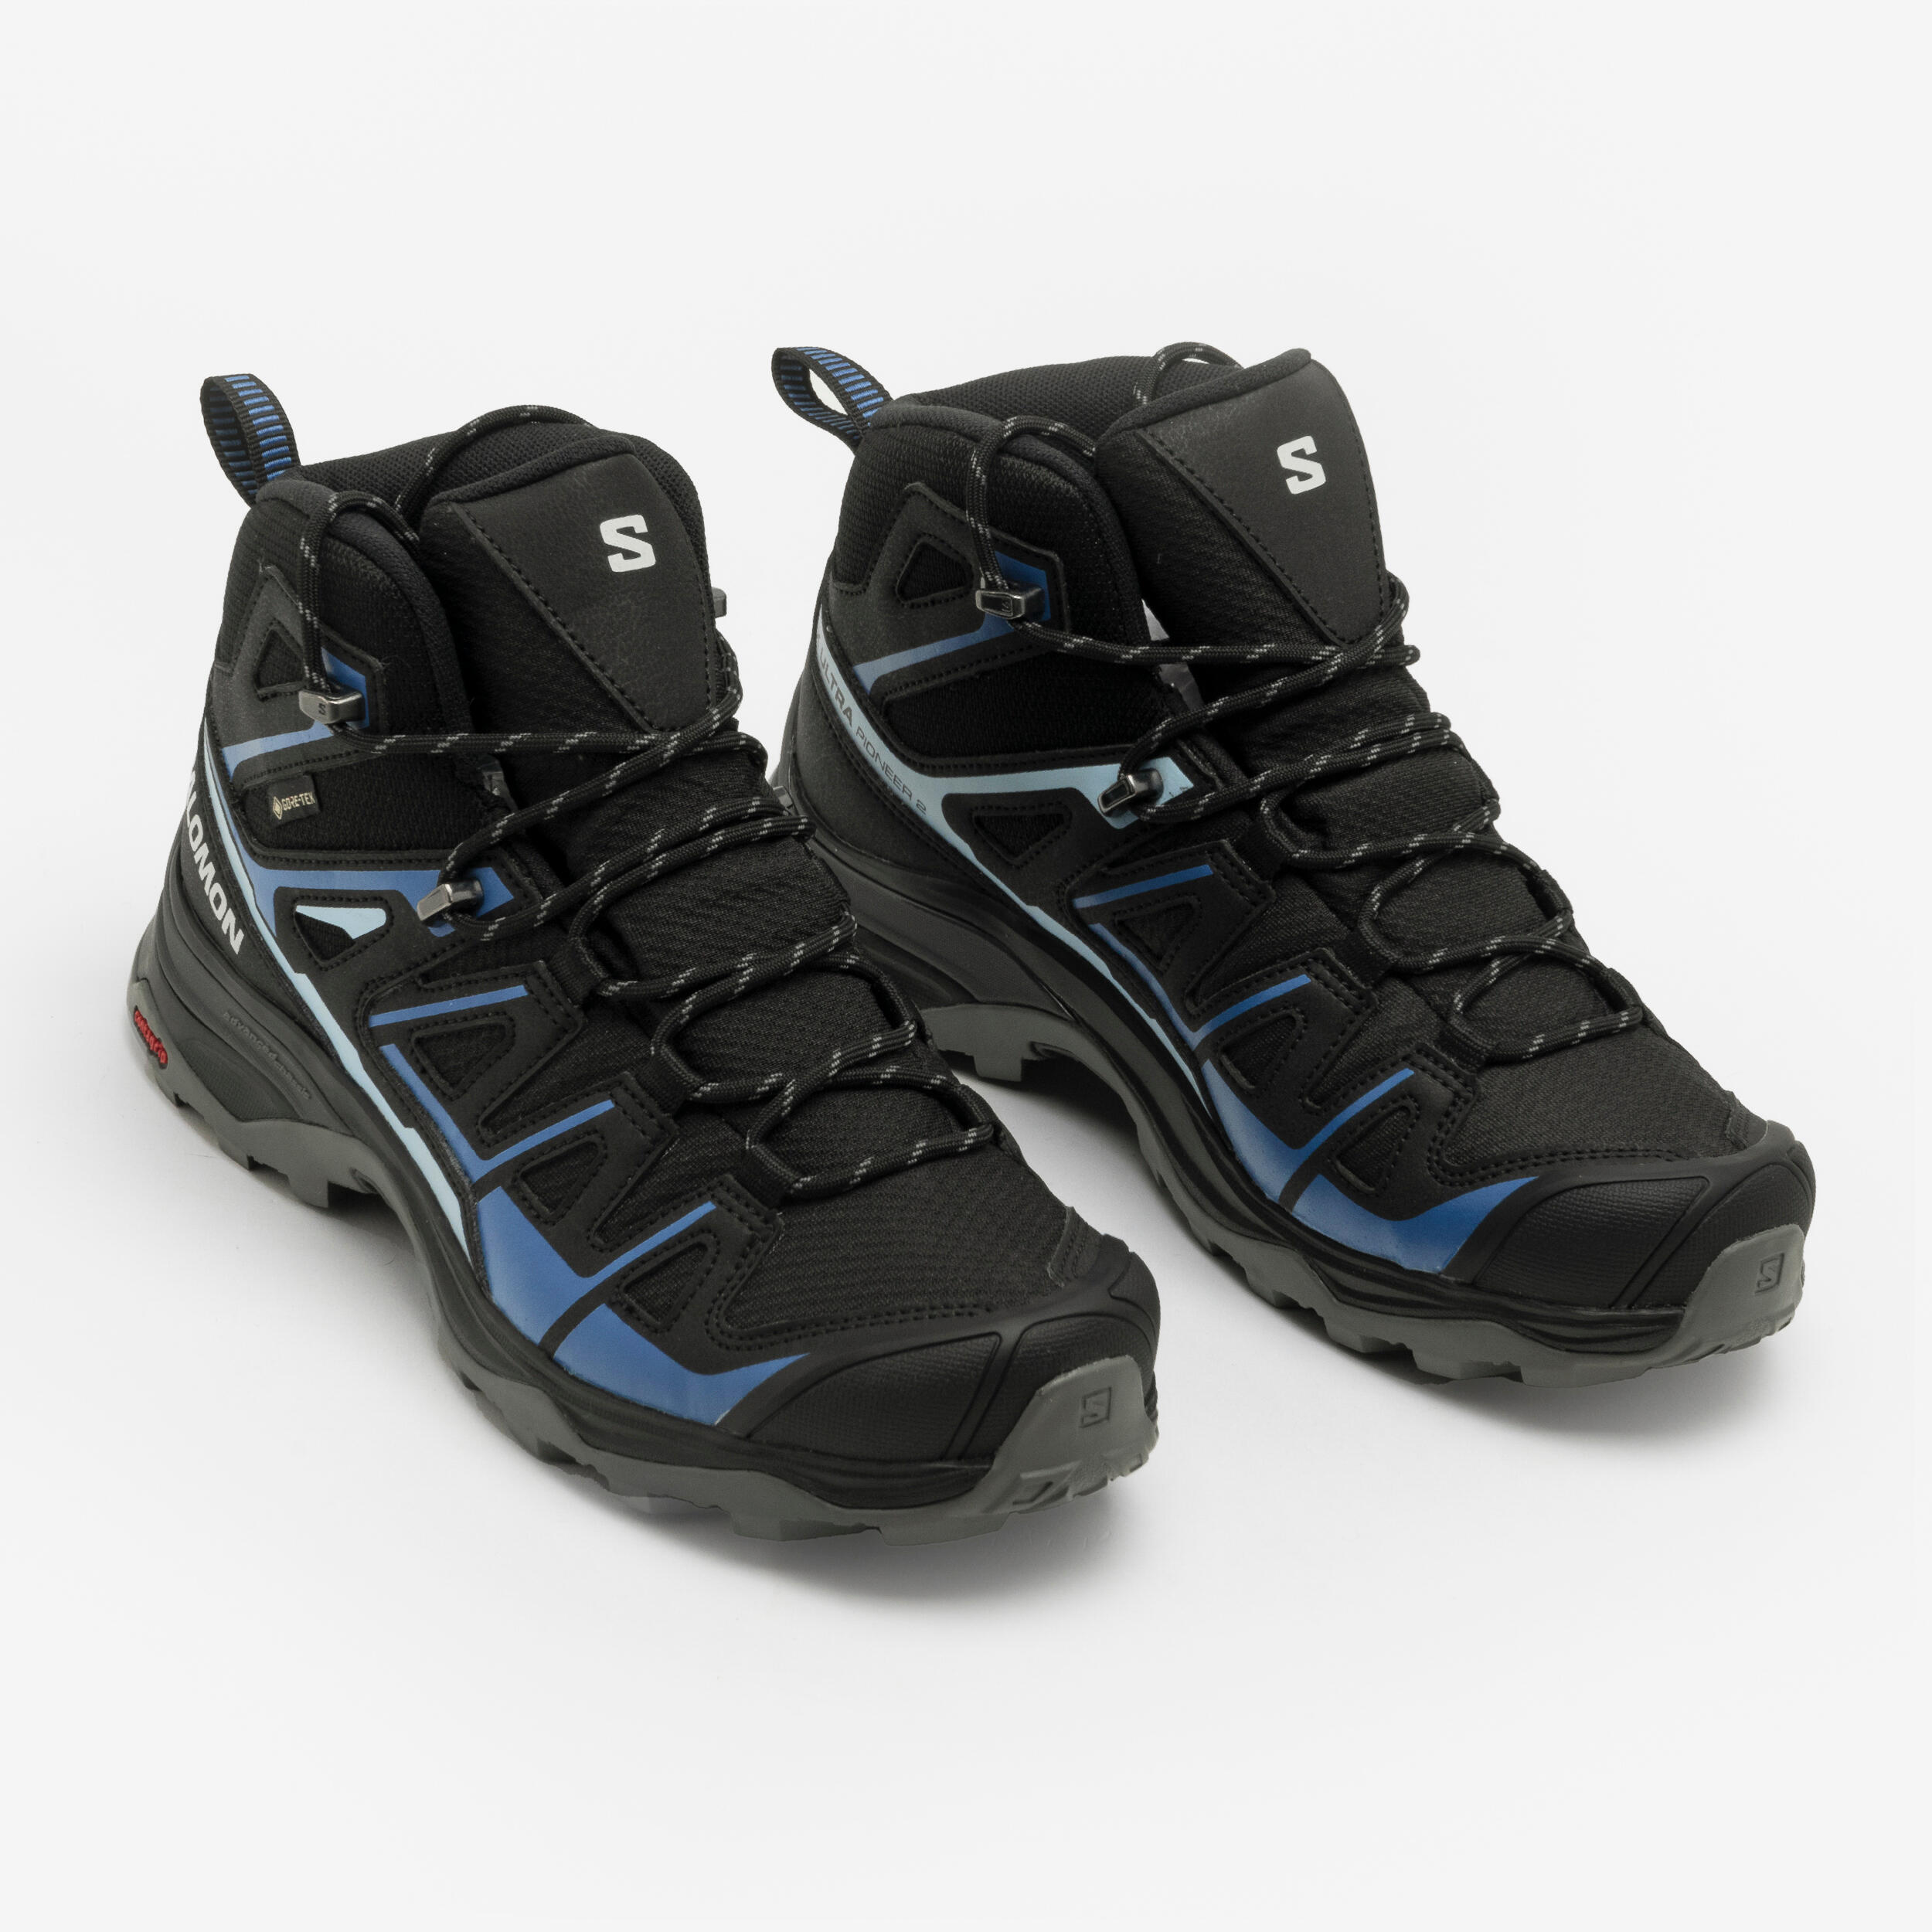 Women’s waterproof hiking boots - Salomon X ULTRA Pioneer 2 GTX 5/5